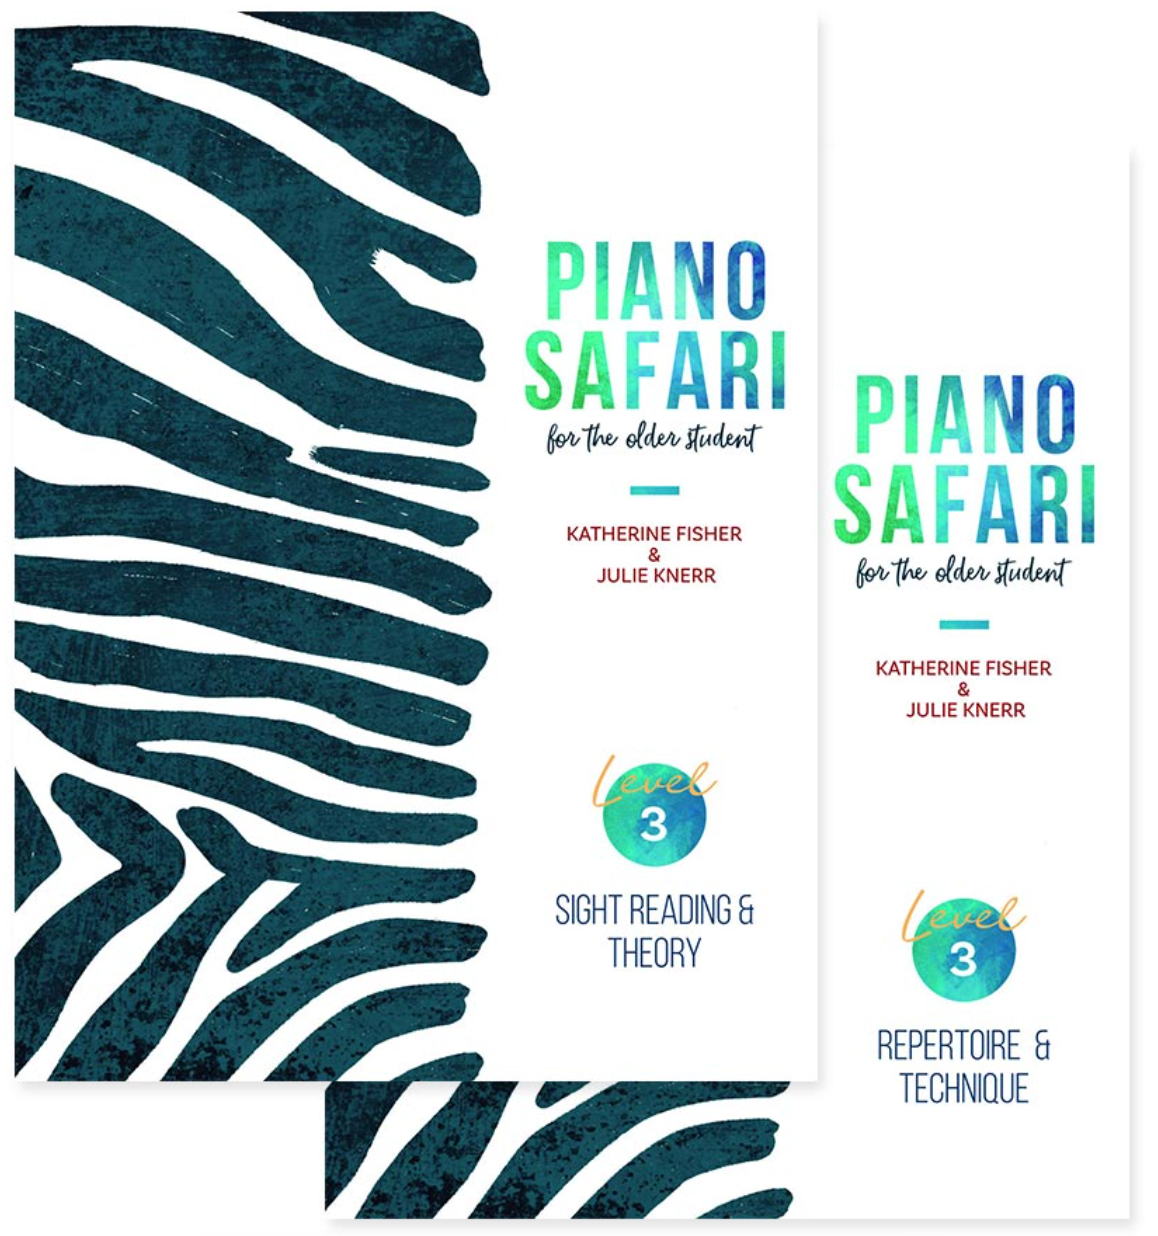 Piano Safari Older Student Repertoire & Technique 3 - Fisher Katherine; Hague Julie Knerr Piano Safari PNSF1060